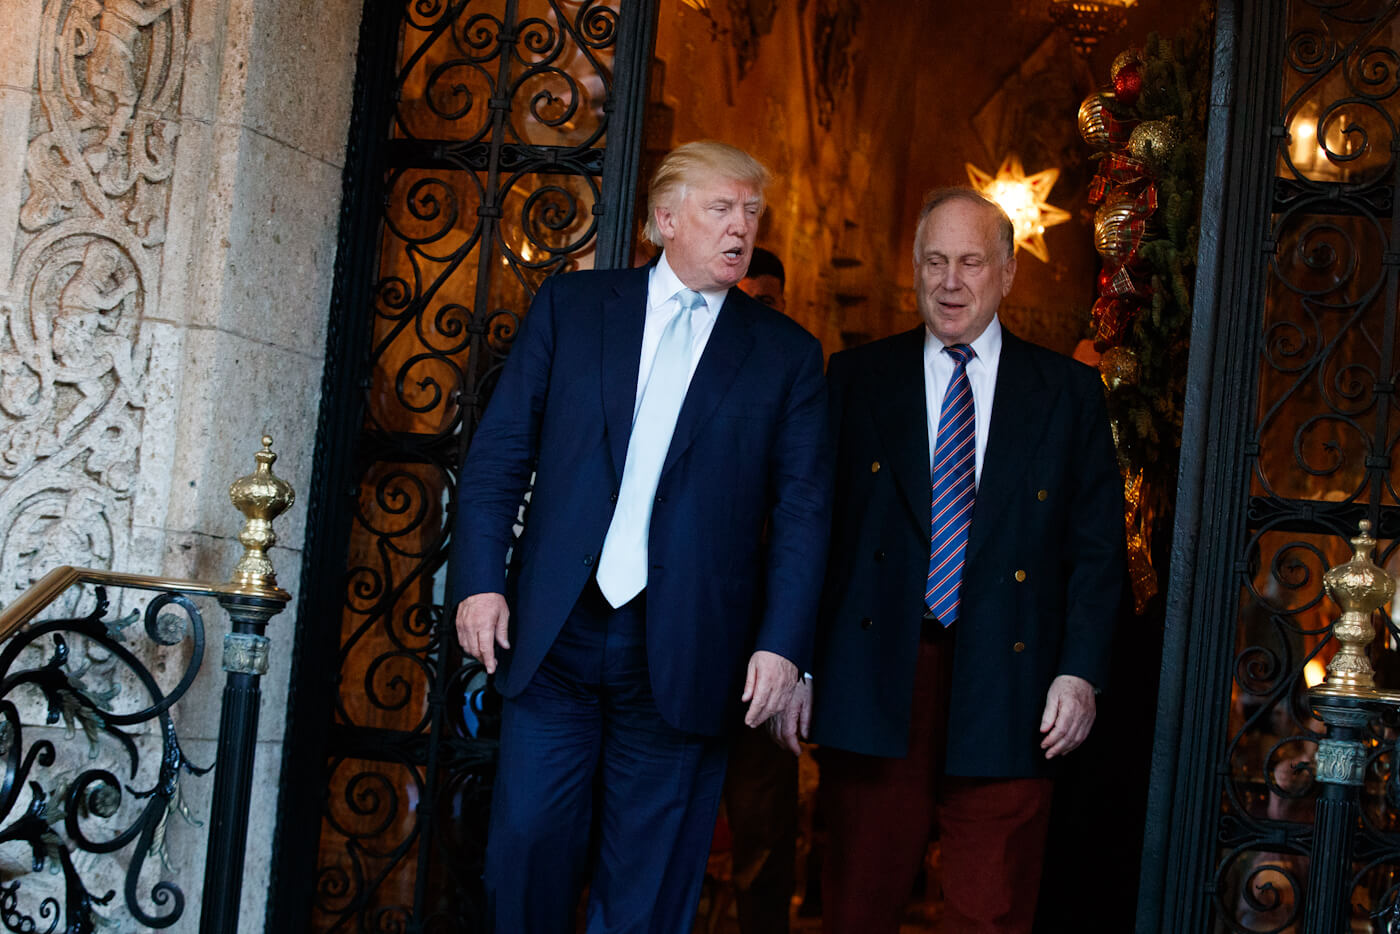 President-elect Trump walks with Ronald Lauder after meeting at Mar-a-Lago, Dec. 28, 2016, in Palm Beach, Fla. Evan Vucci | AP